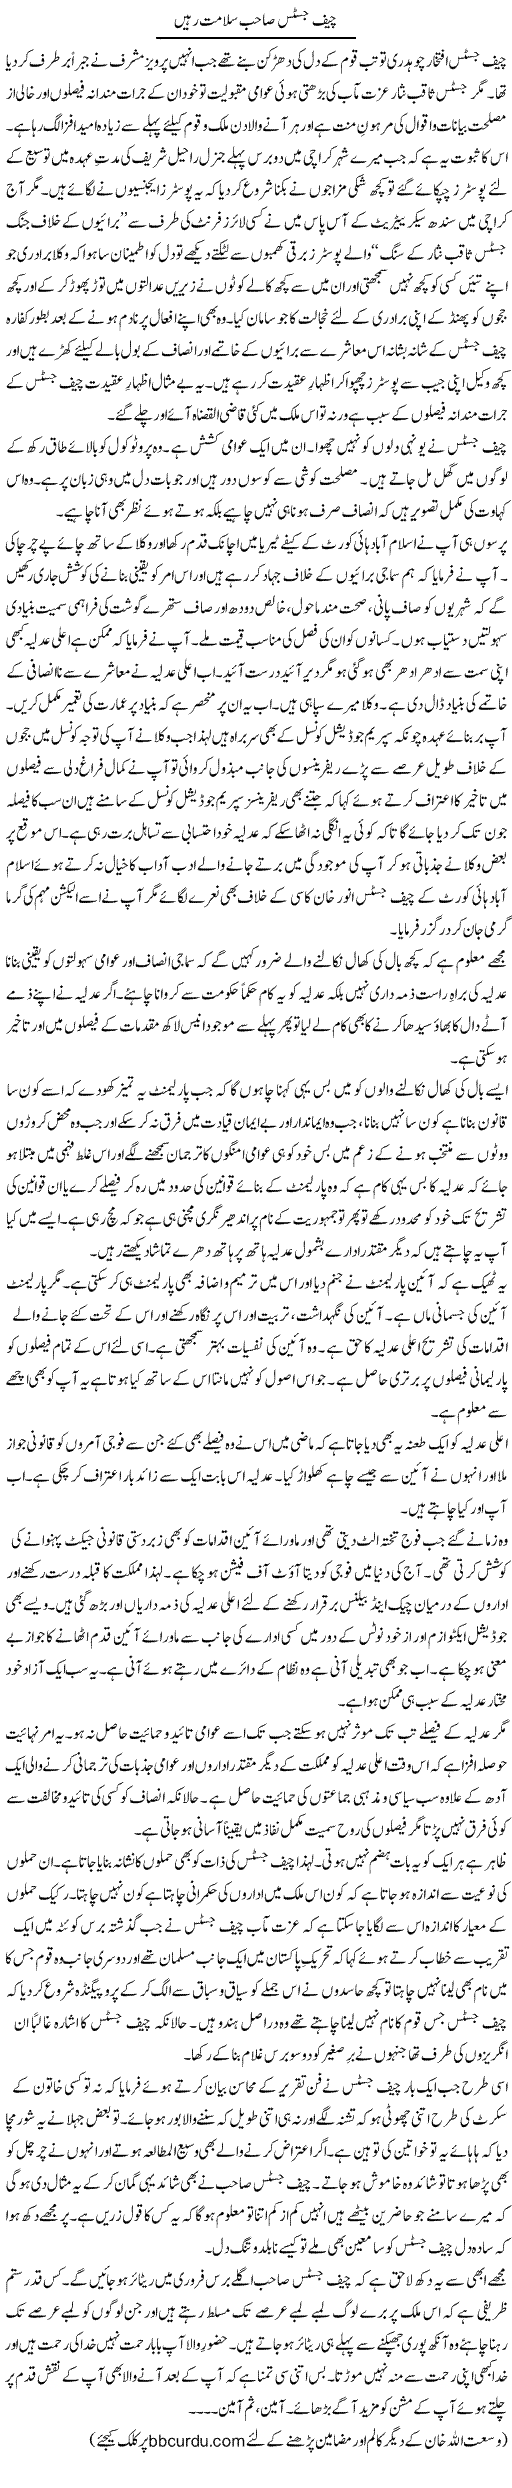 Chief Justice Sahib Salamat Rahen | Wusat Ullah Khan | Daily Urdu Columns